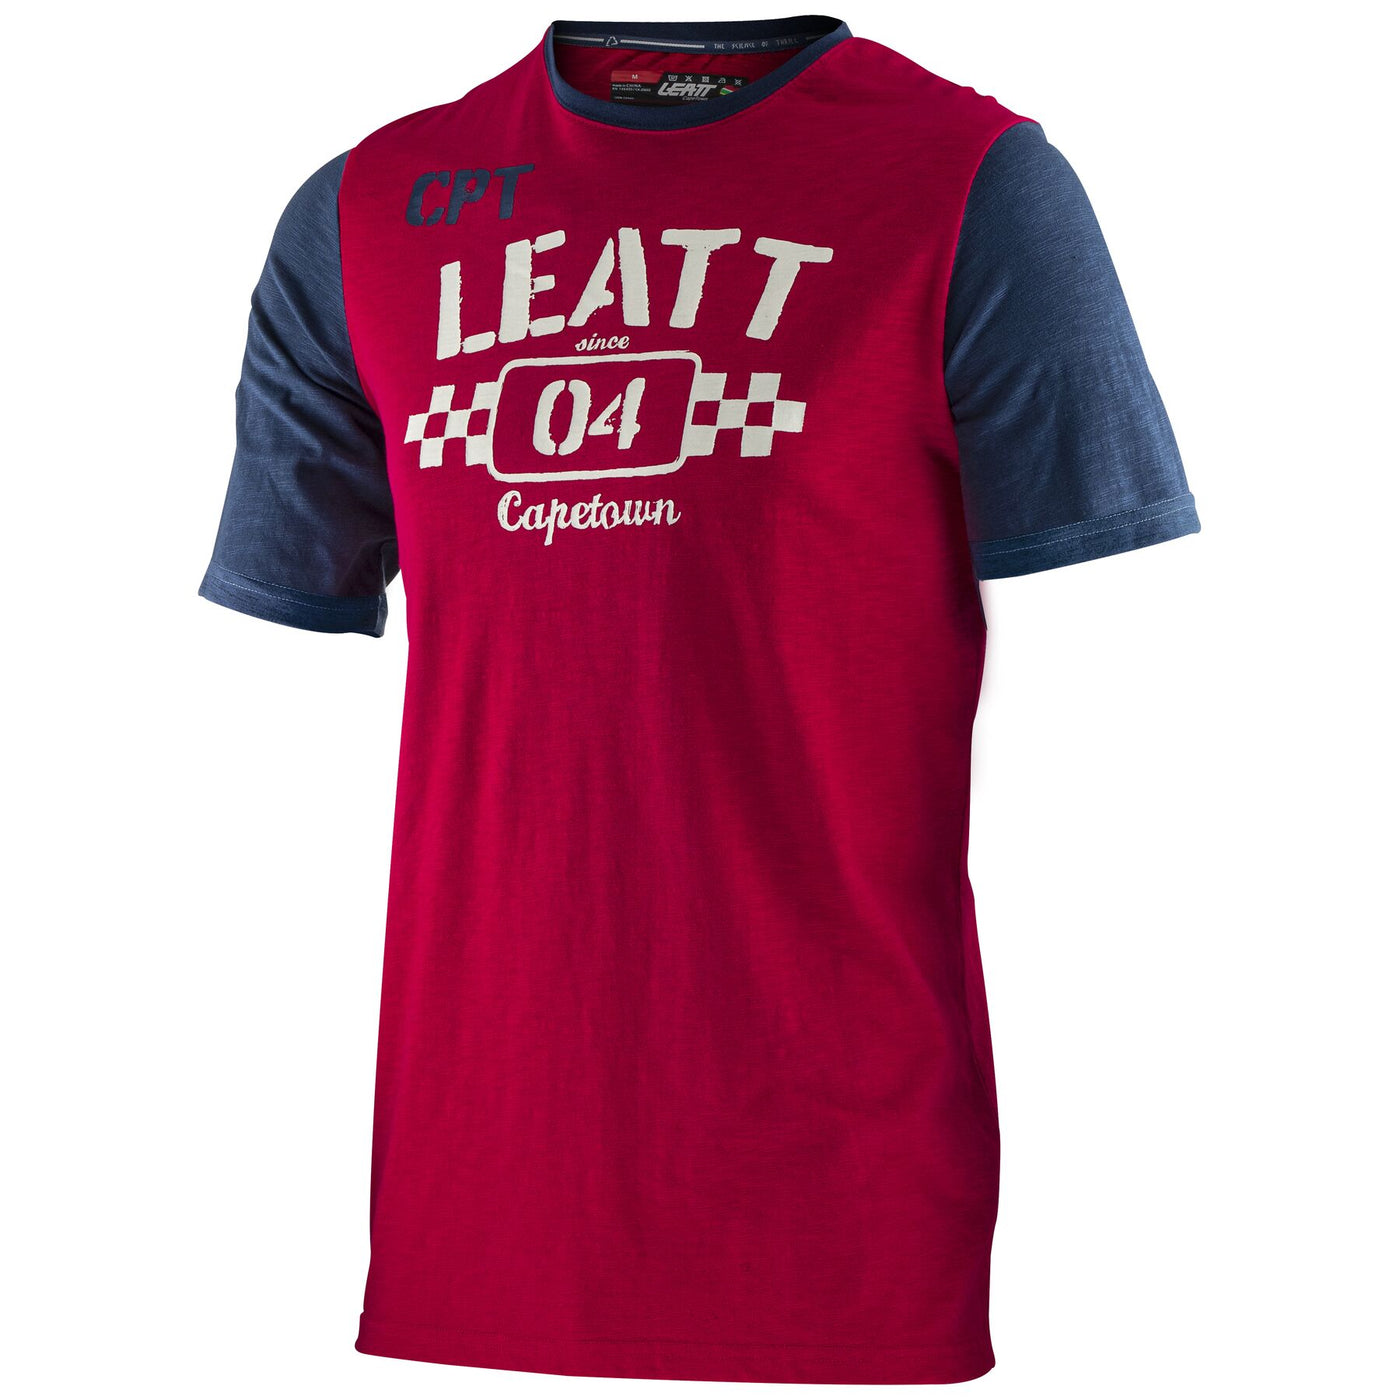 Leatt T-Shirt Heritage